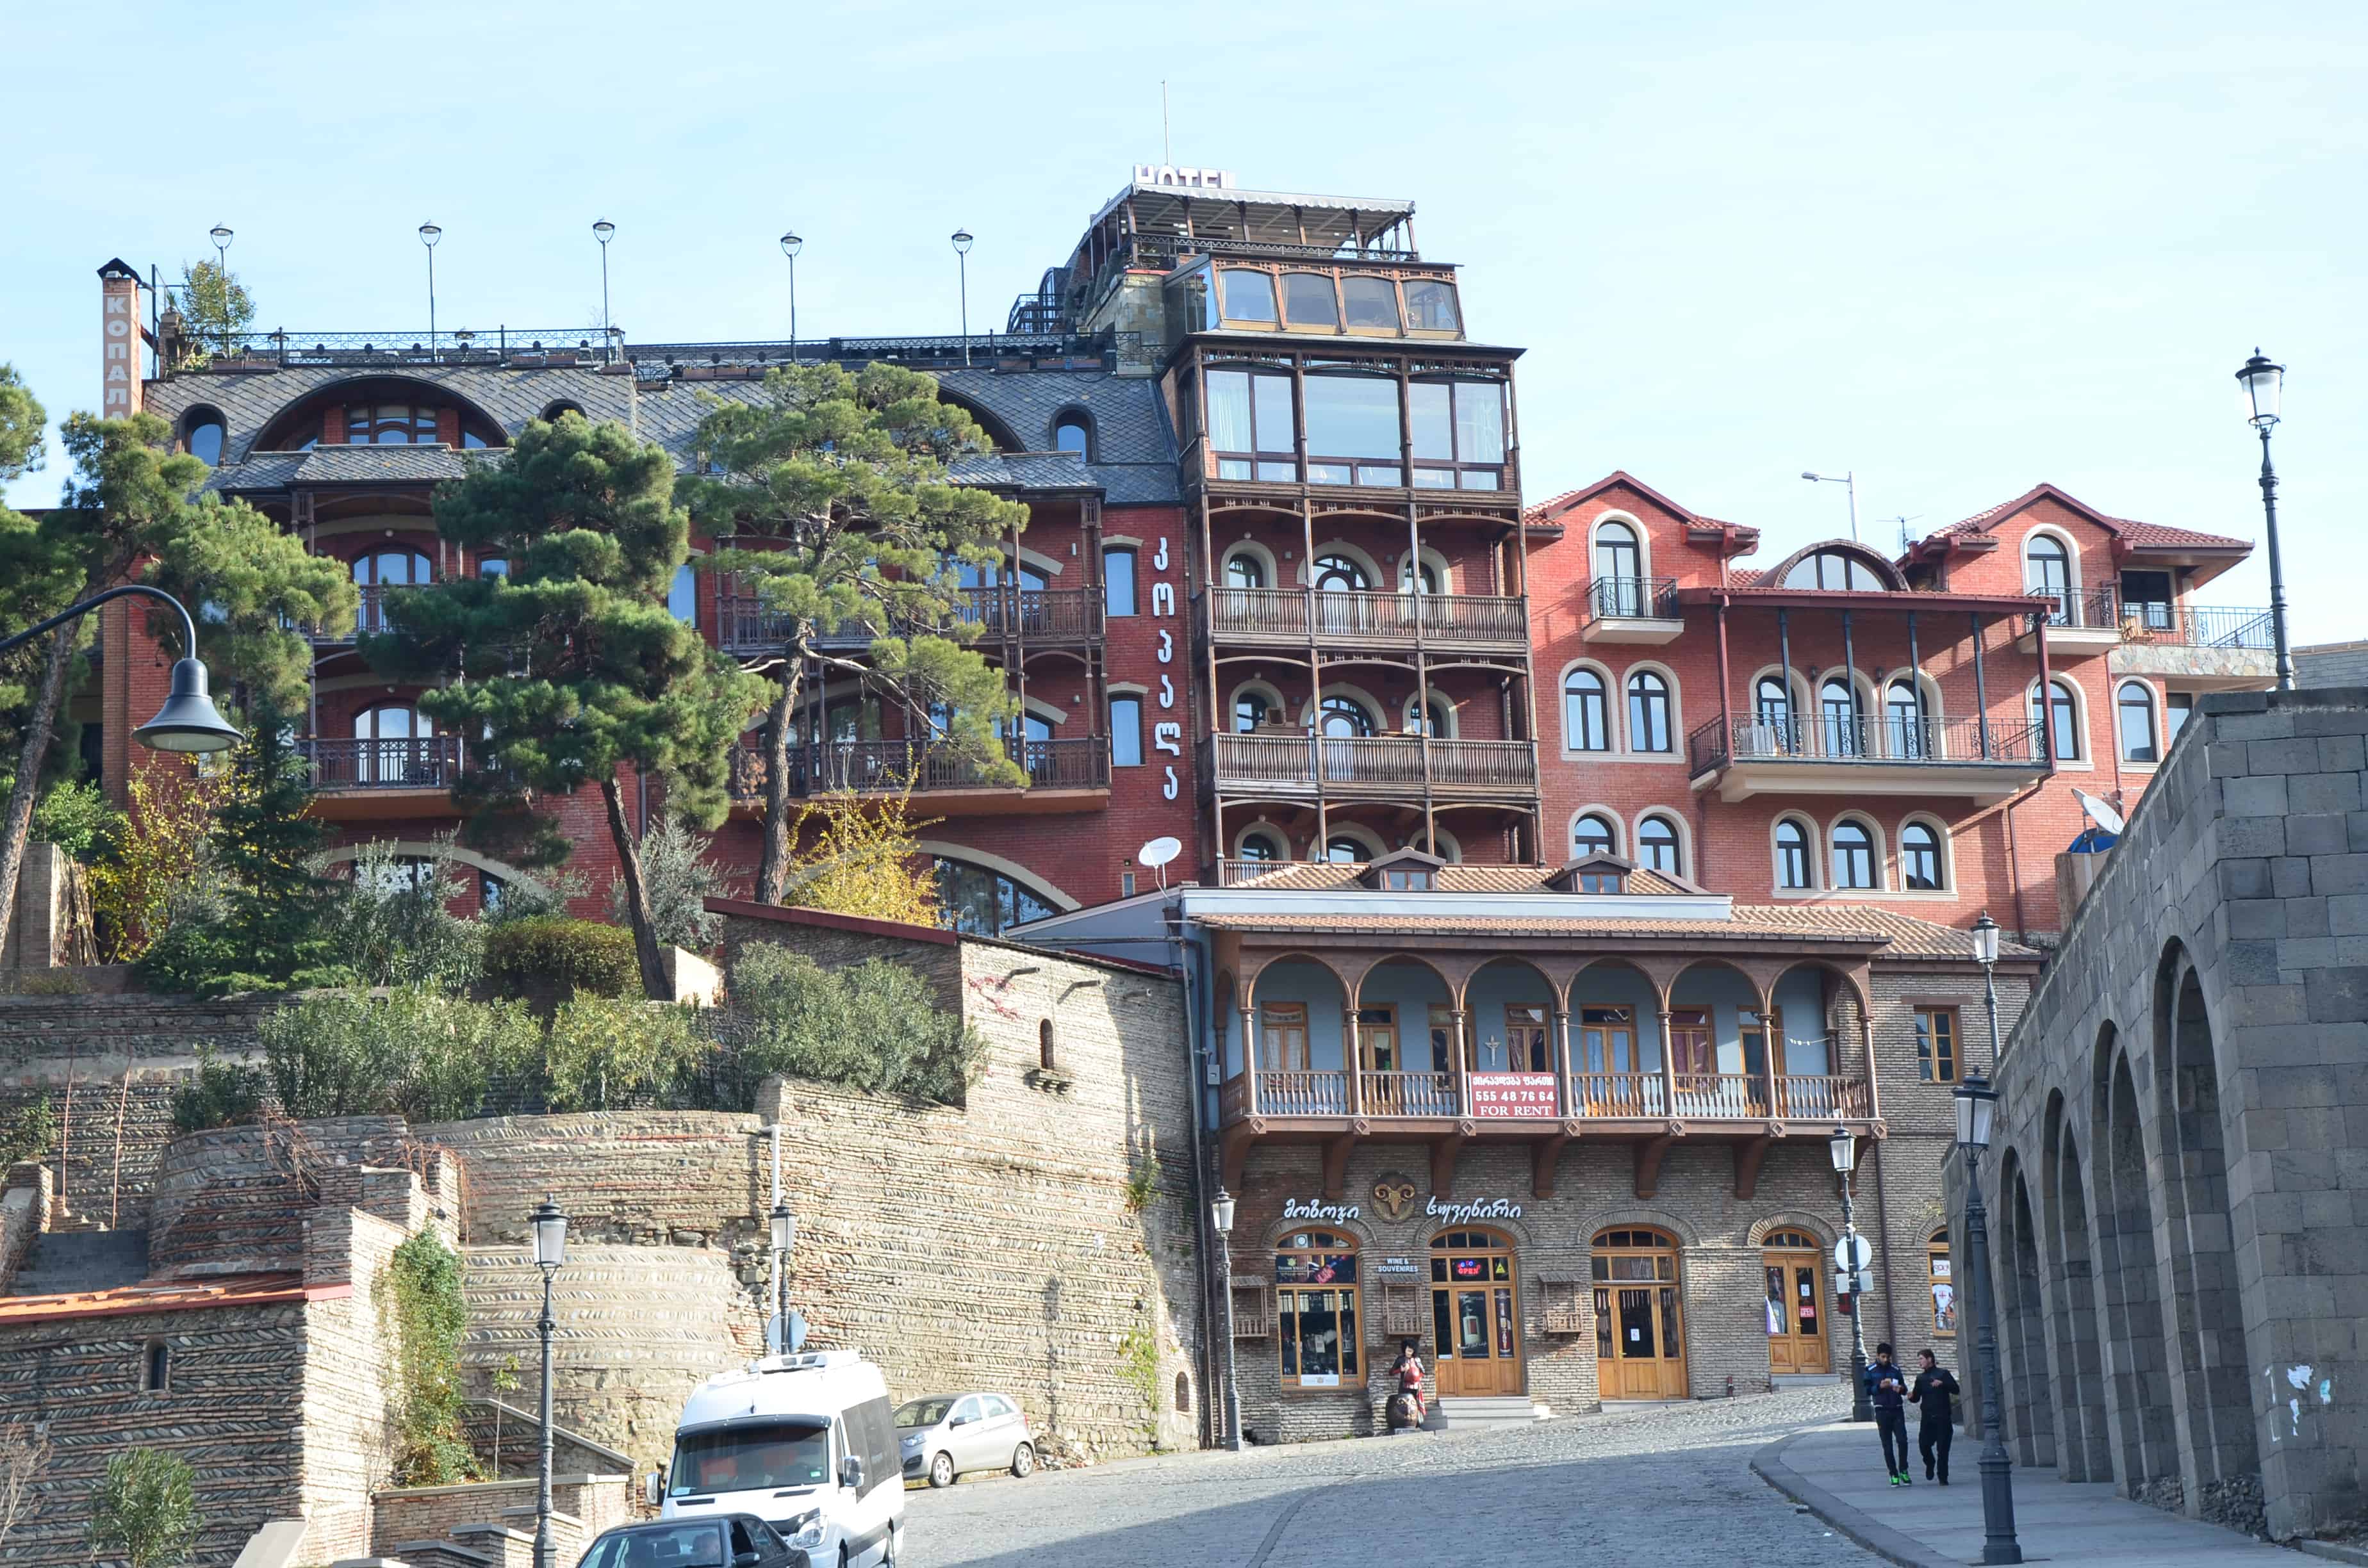 Avlabari in Tbilisi, Georgia